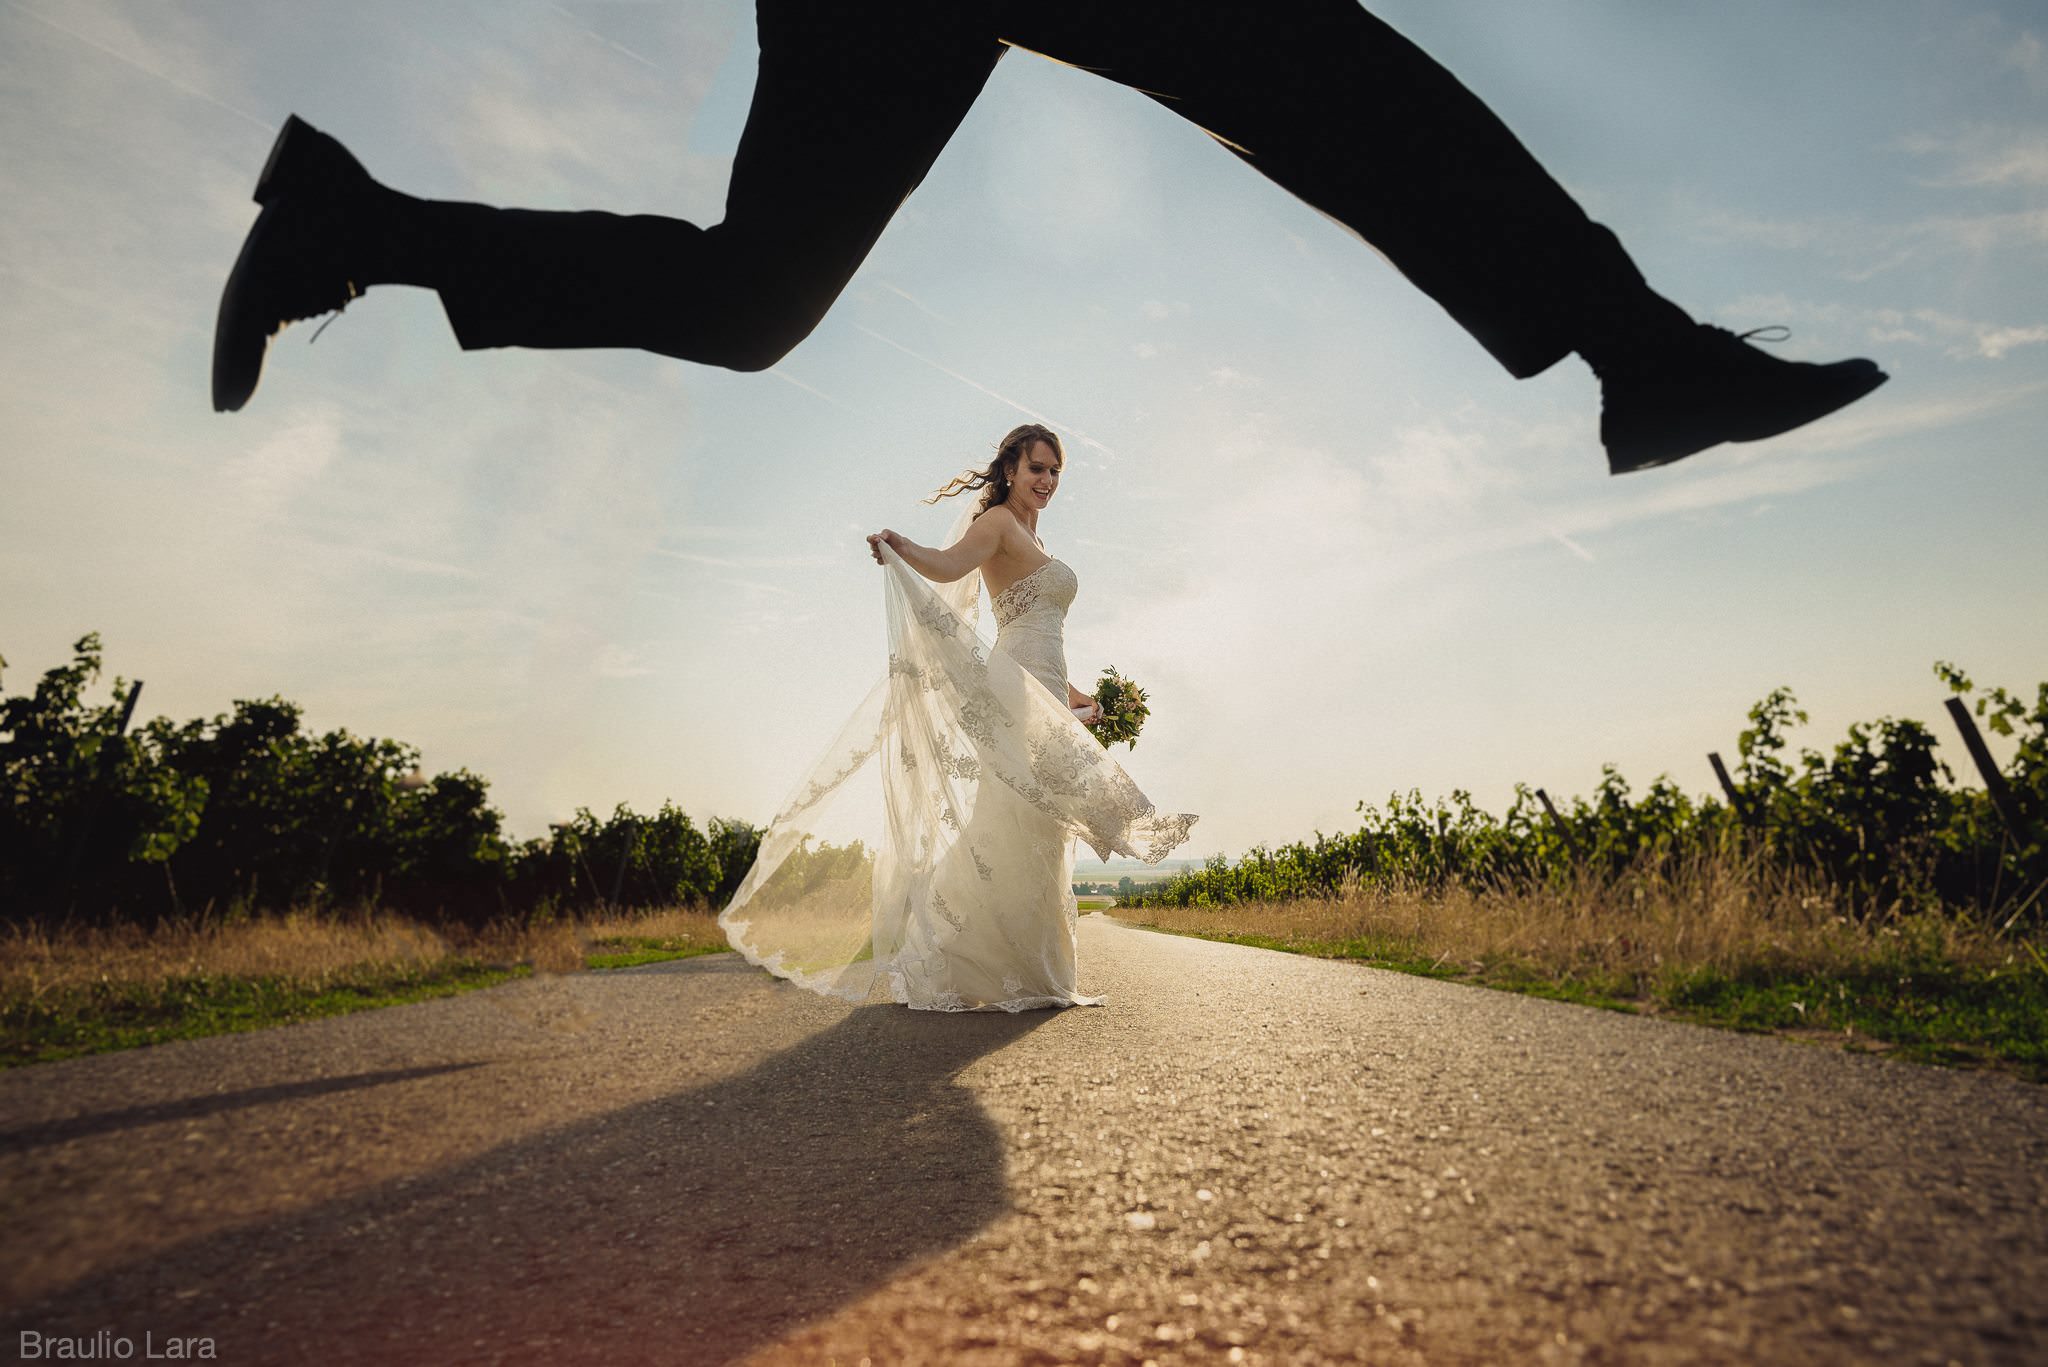 Recherche-Photographe-mariage-paris-tarifs-photographie-mariages-wedding-planning-julesetmoi-j&m-Braulio Lara-10.jpg